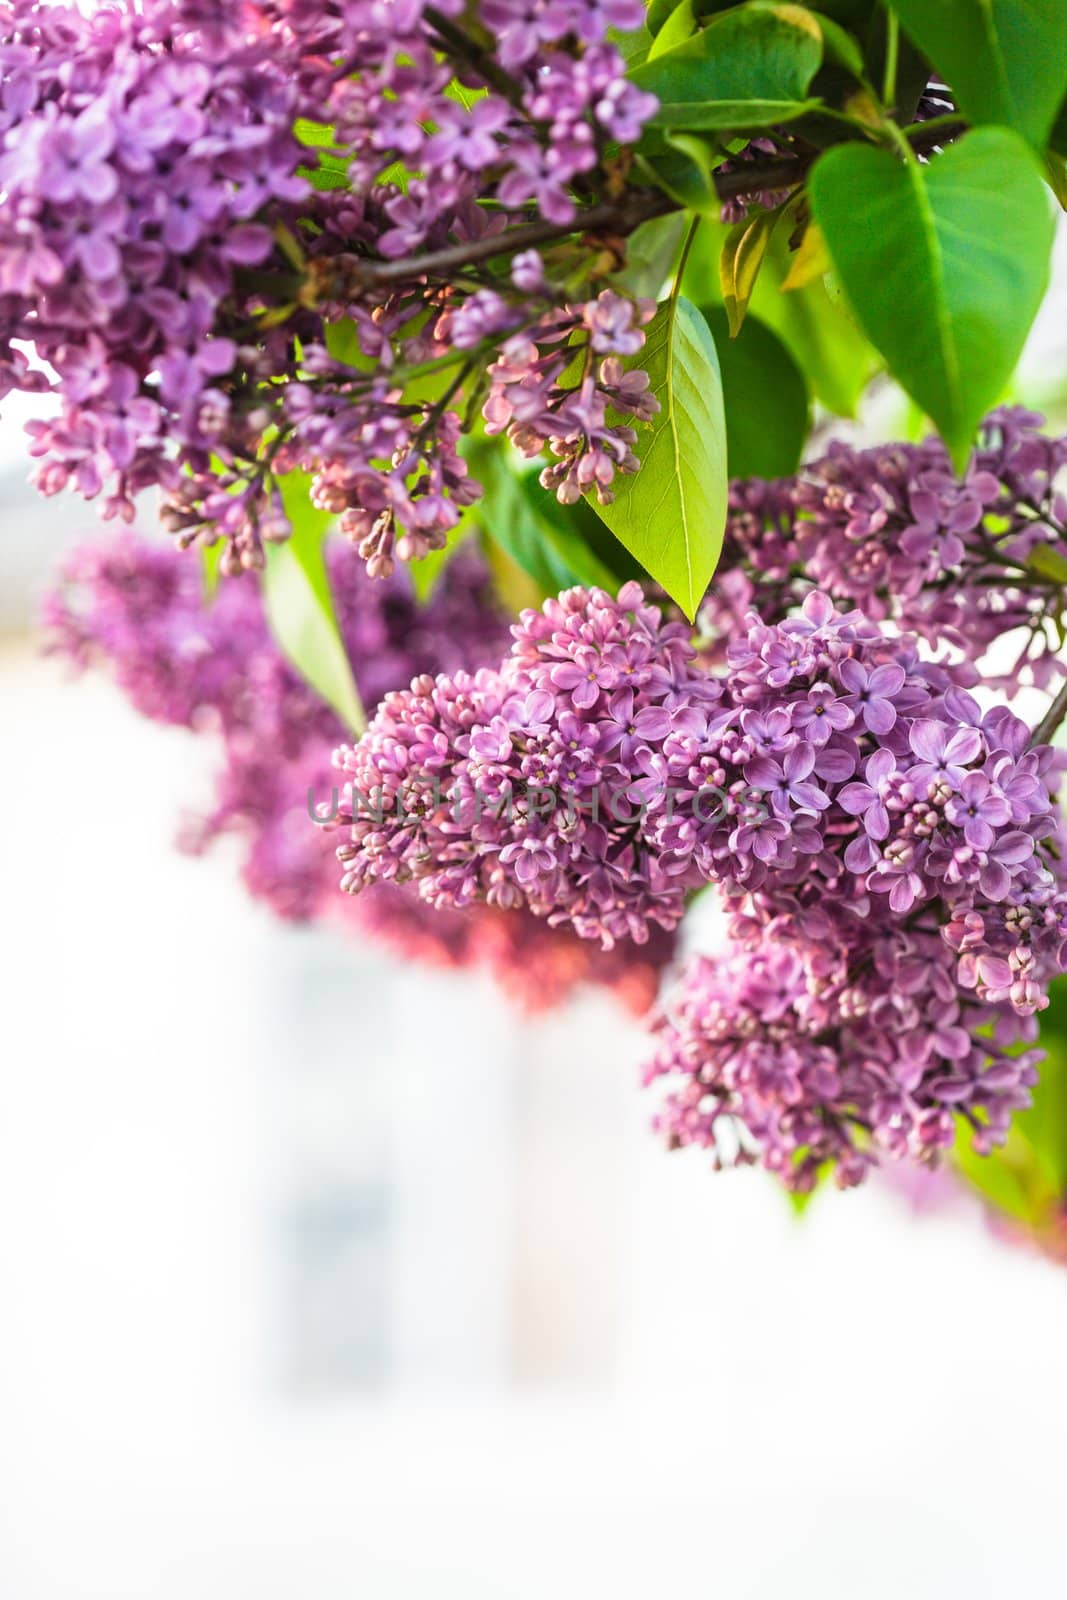 Lilac flowers by oksix